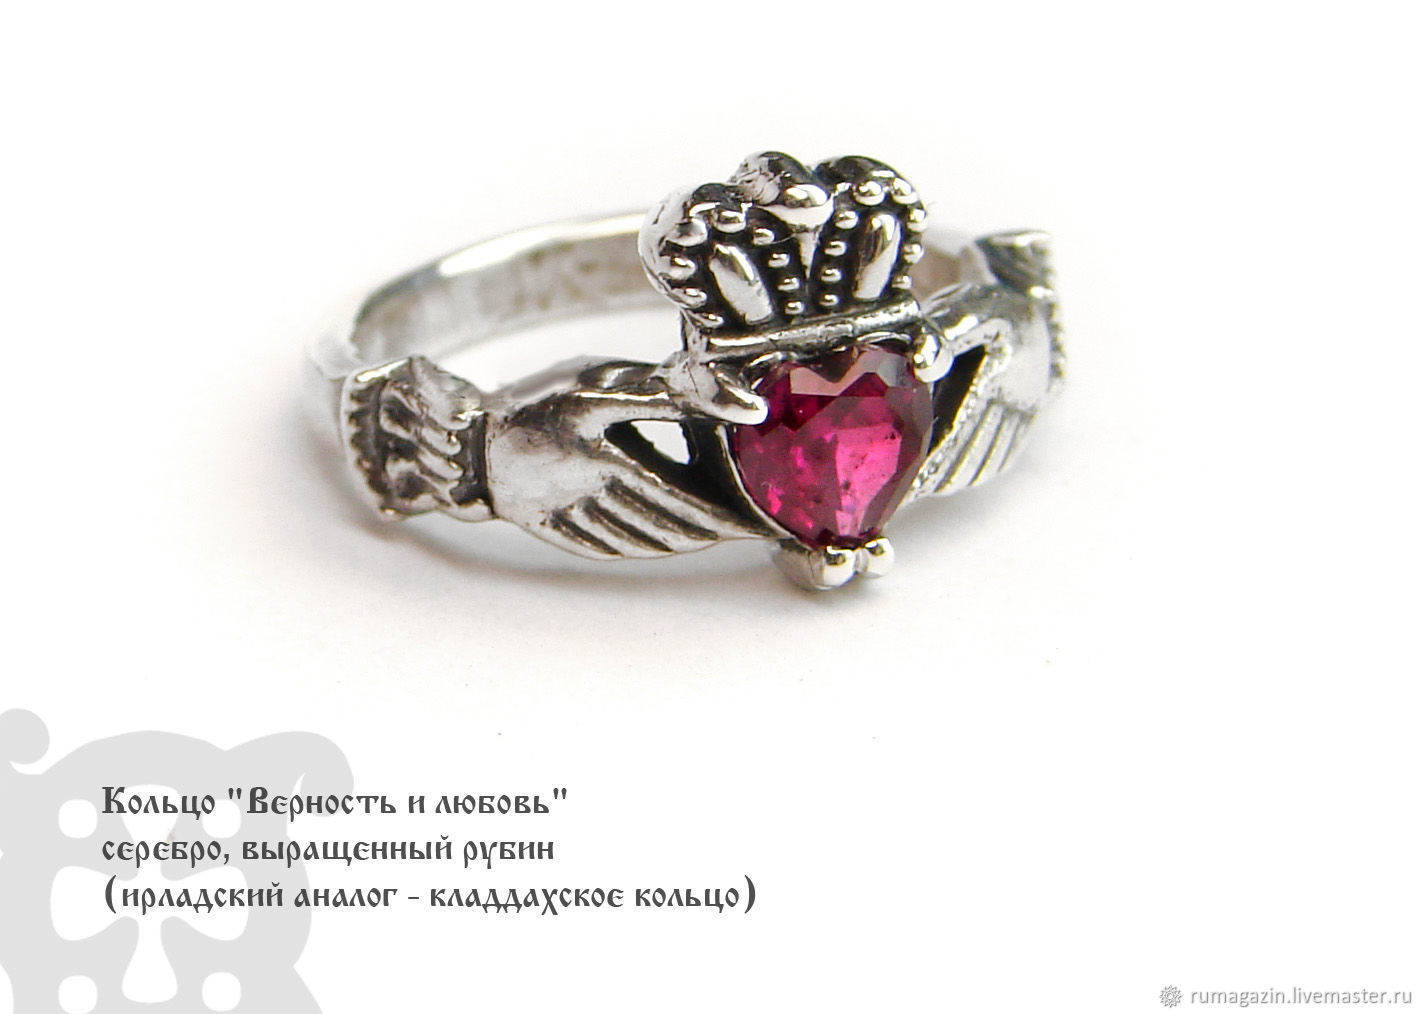 Камень верности. Кольцо верности. Кладдахское кольцо. Кольцо символ любви и верности. Кольцо верности для женщин.